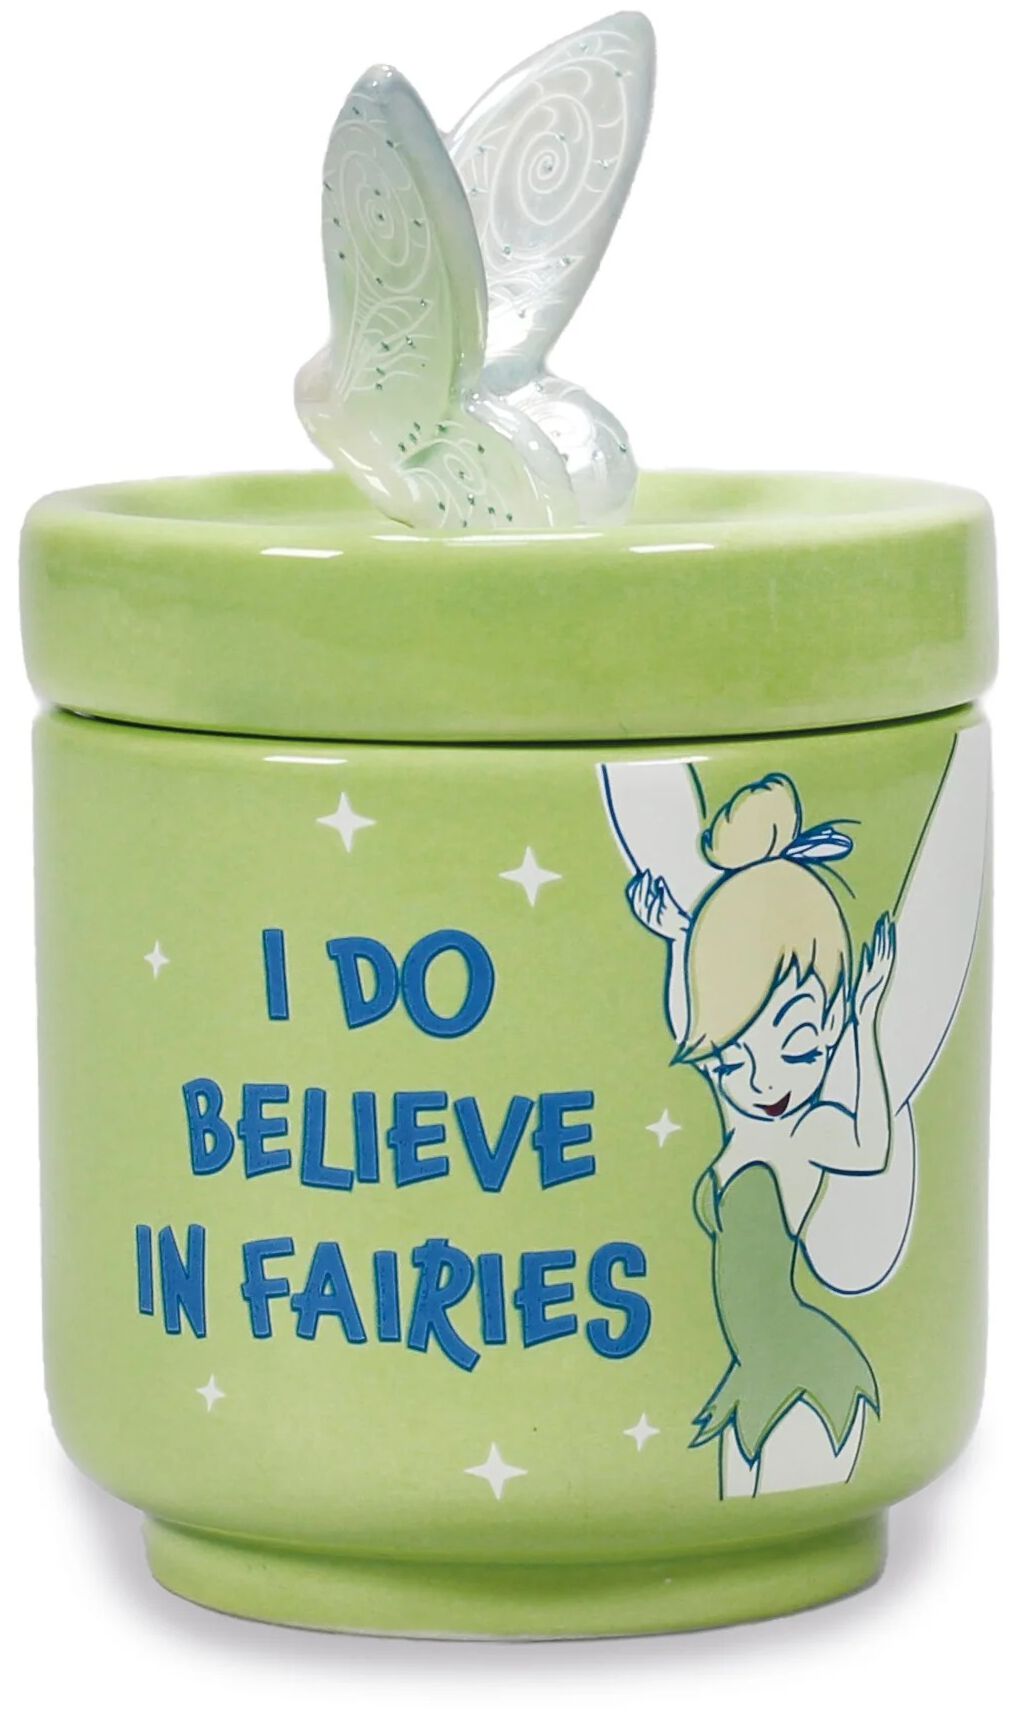 Peter Pan - I Do Believe in Fairies - Aufbewahrungsbox - multicolor